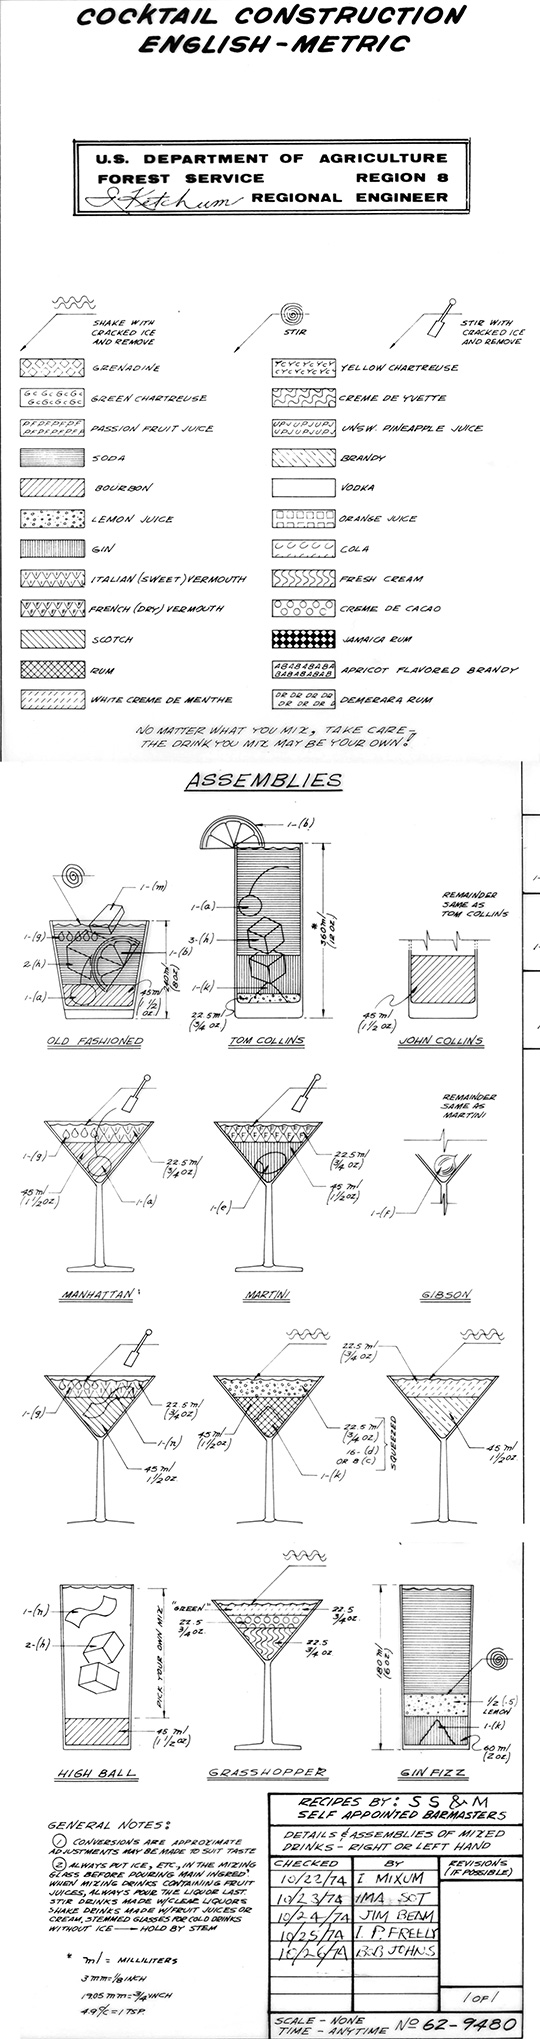 forest service cocktail blueprint